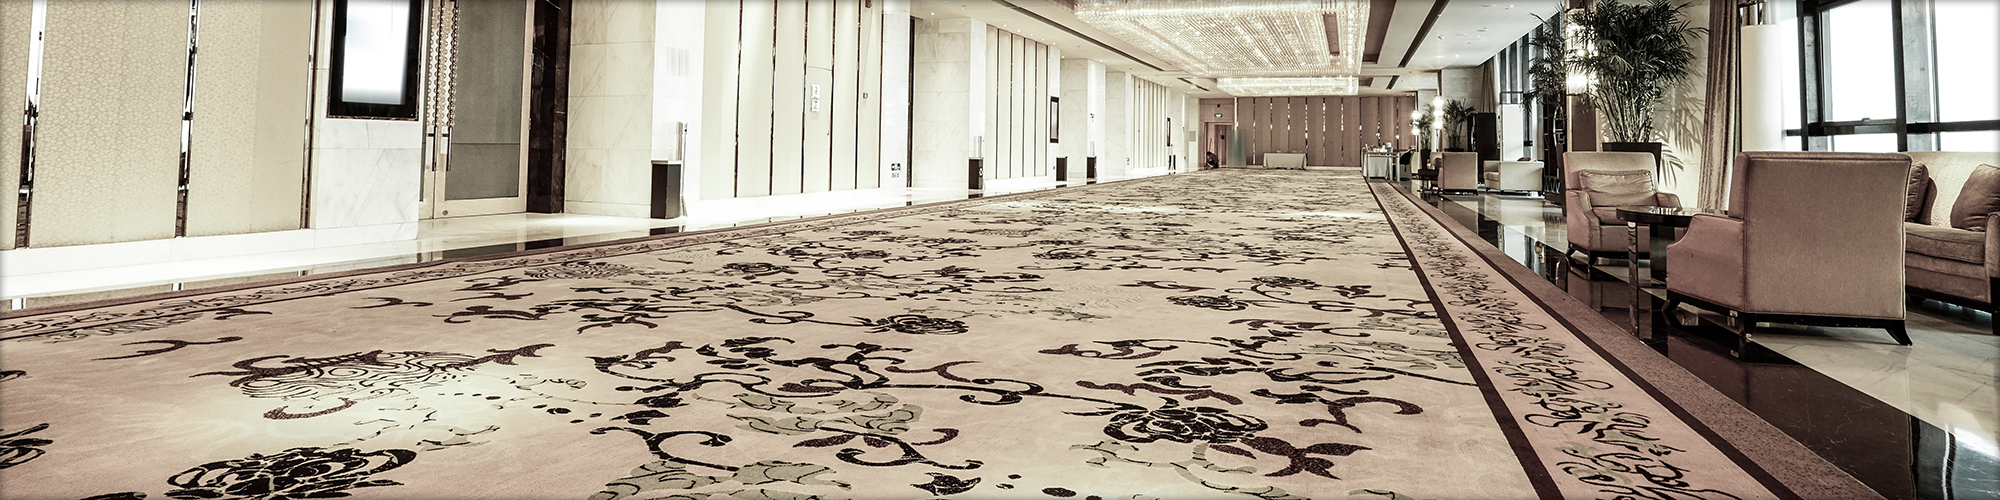 Carpeted Lobby